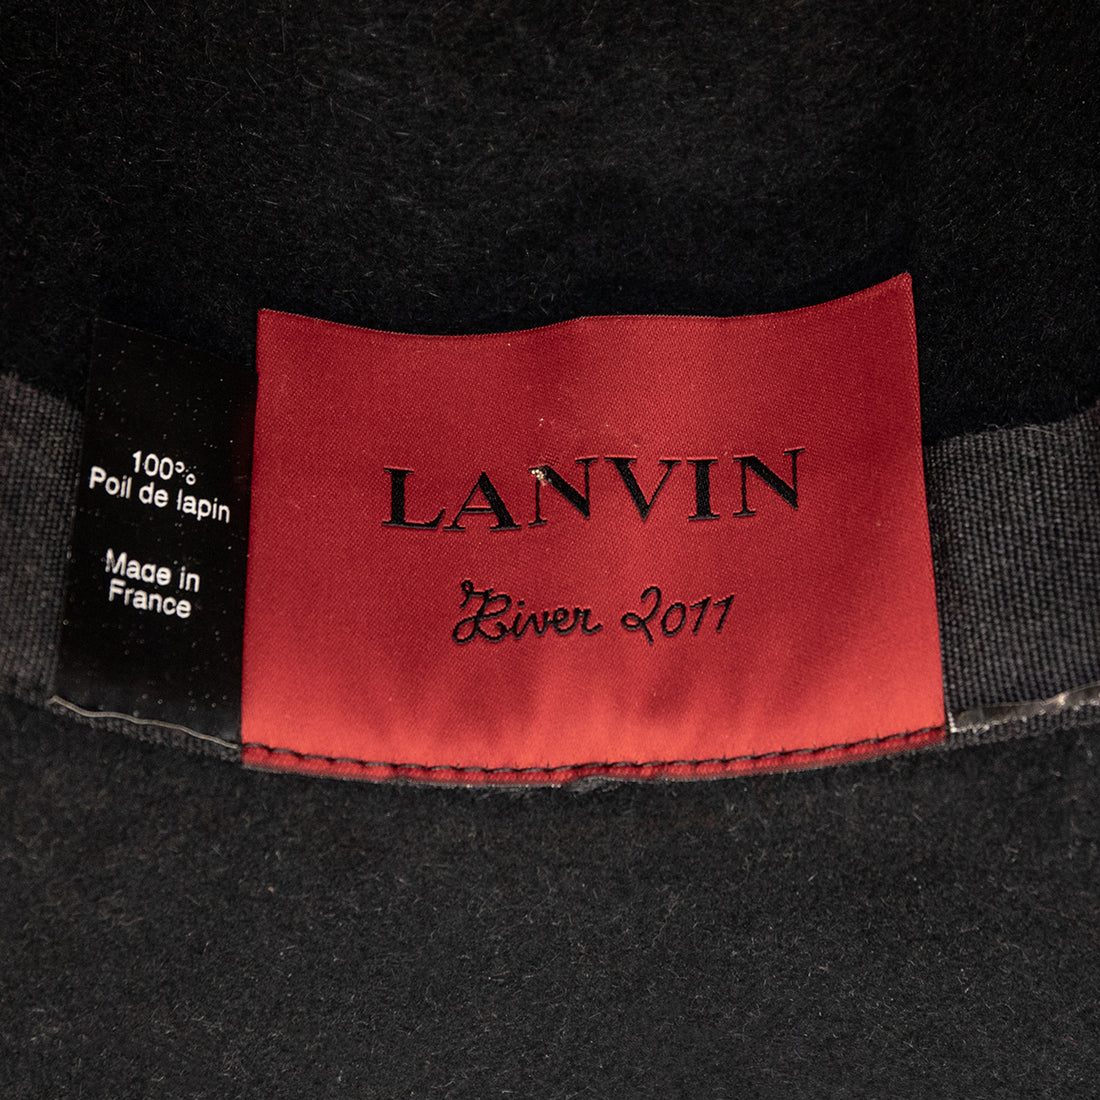 Lanvin felt hat with wide brim